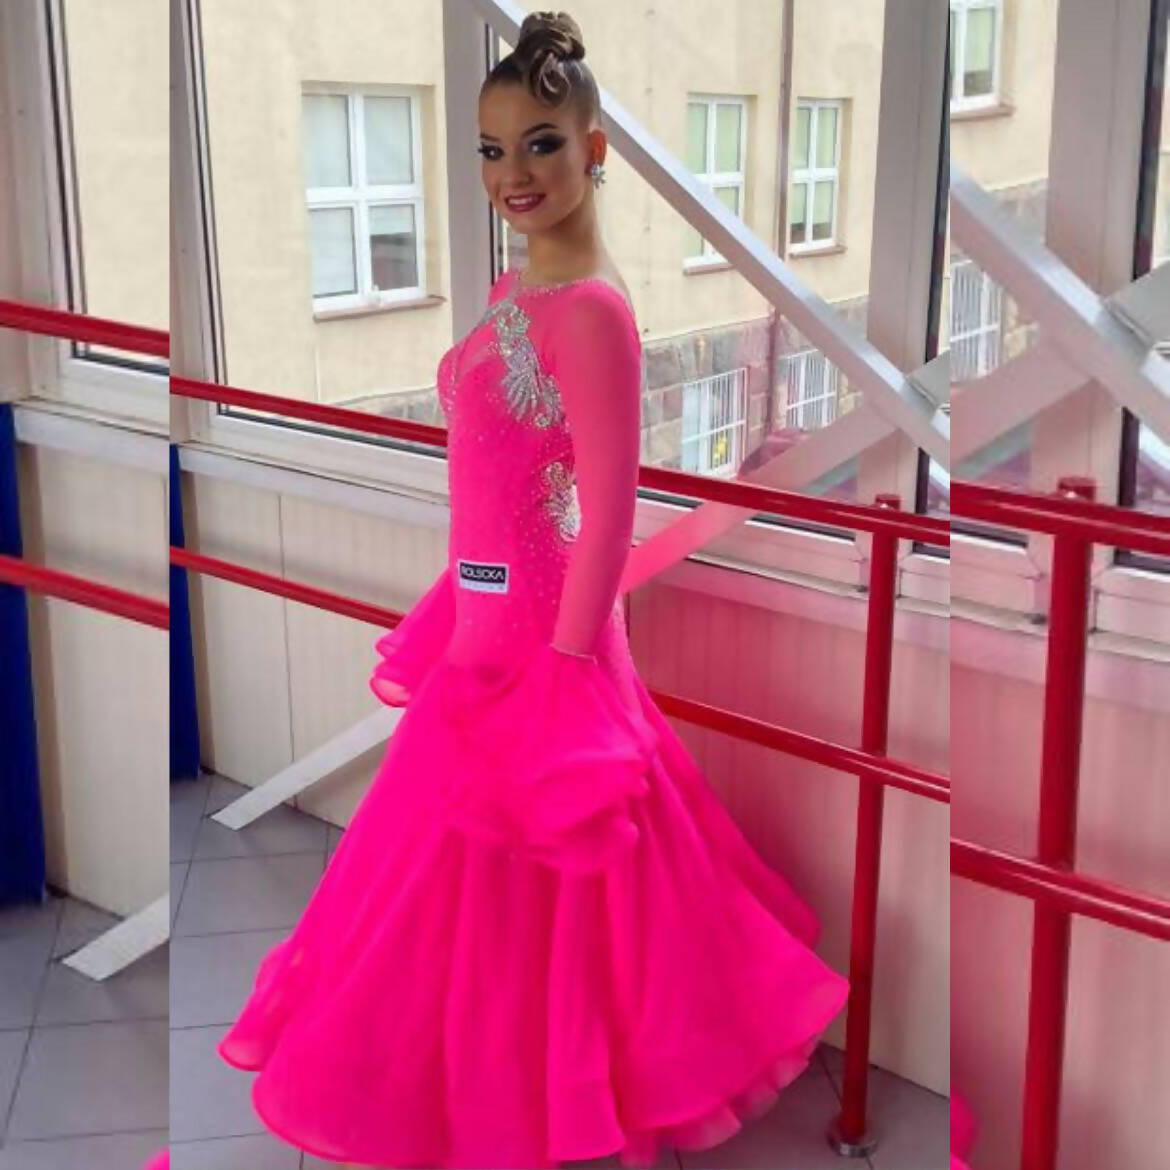 Pink Standard Dress with Stones, Rolecka dress, ballroom dress for sale, standard, modern, smooth